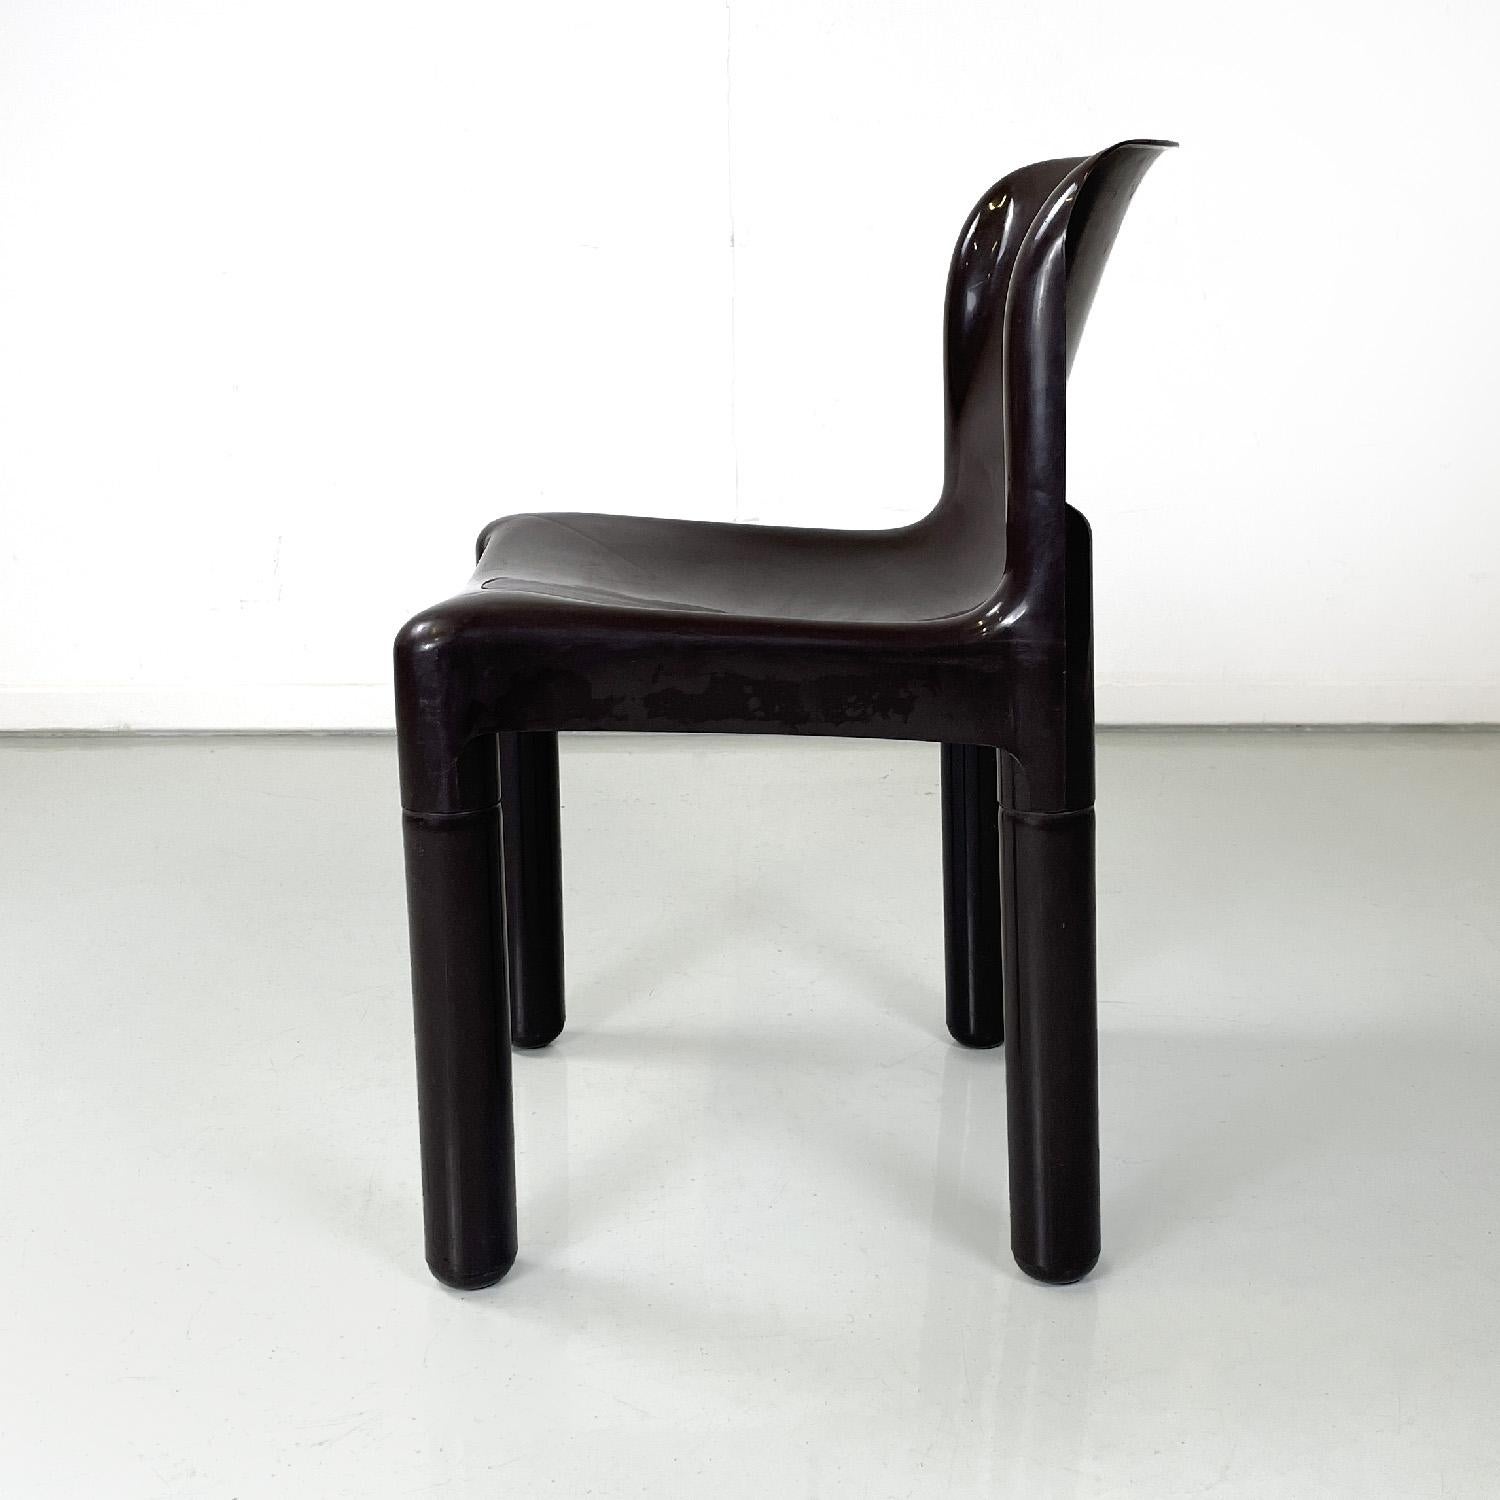 Modern Italian modern brown plastic chair 4875 by Carlo Bartoli for Kartell, 1970s For Sale